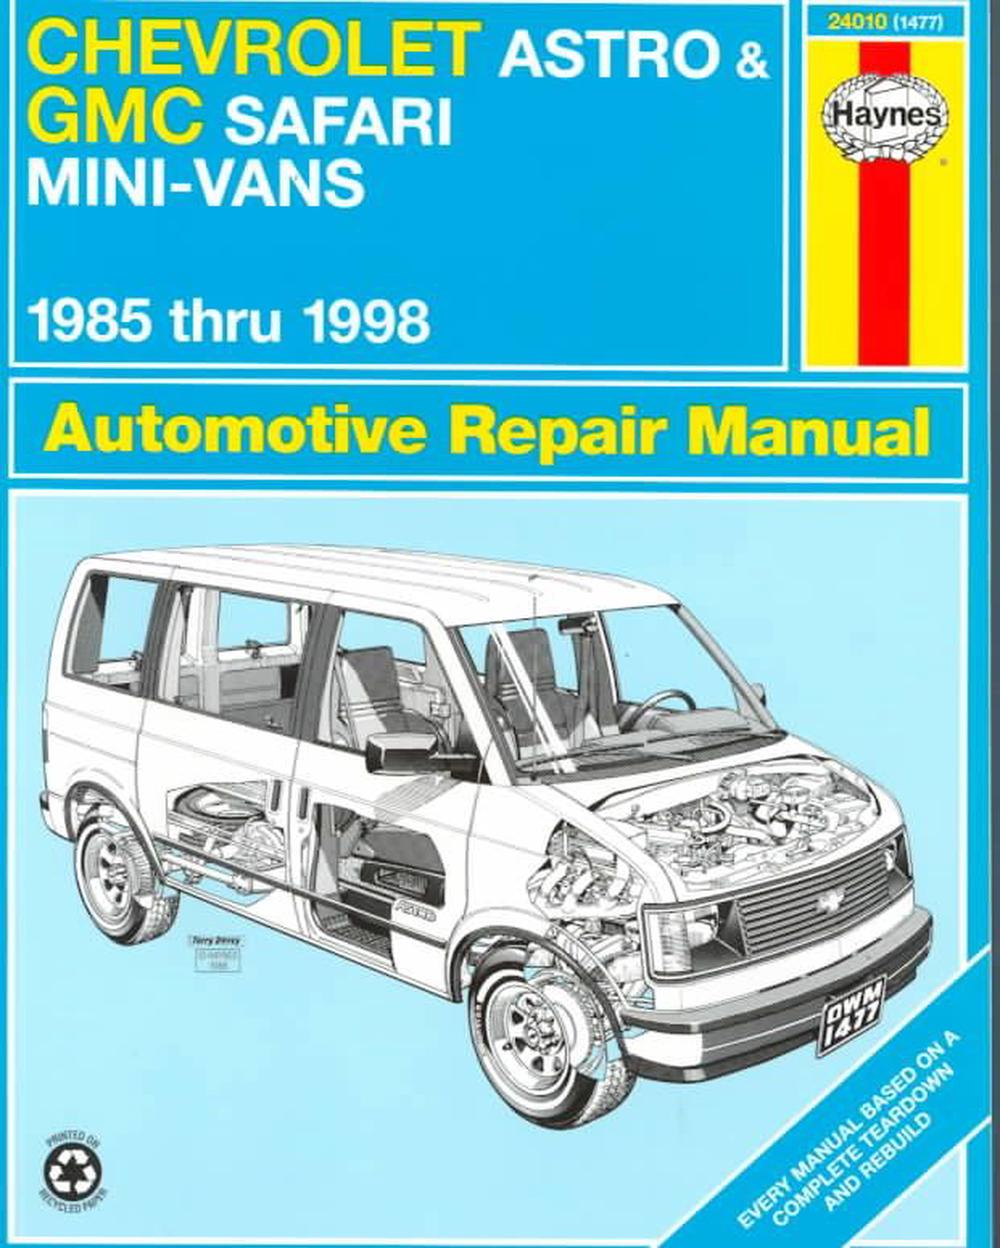 Chevrolet Astro and G.M.C.Safari Minivans (19851998) Automotive